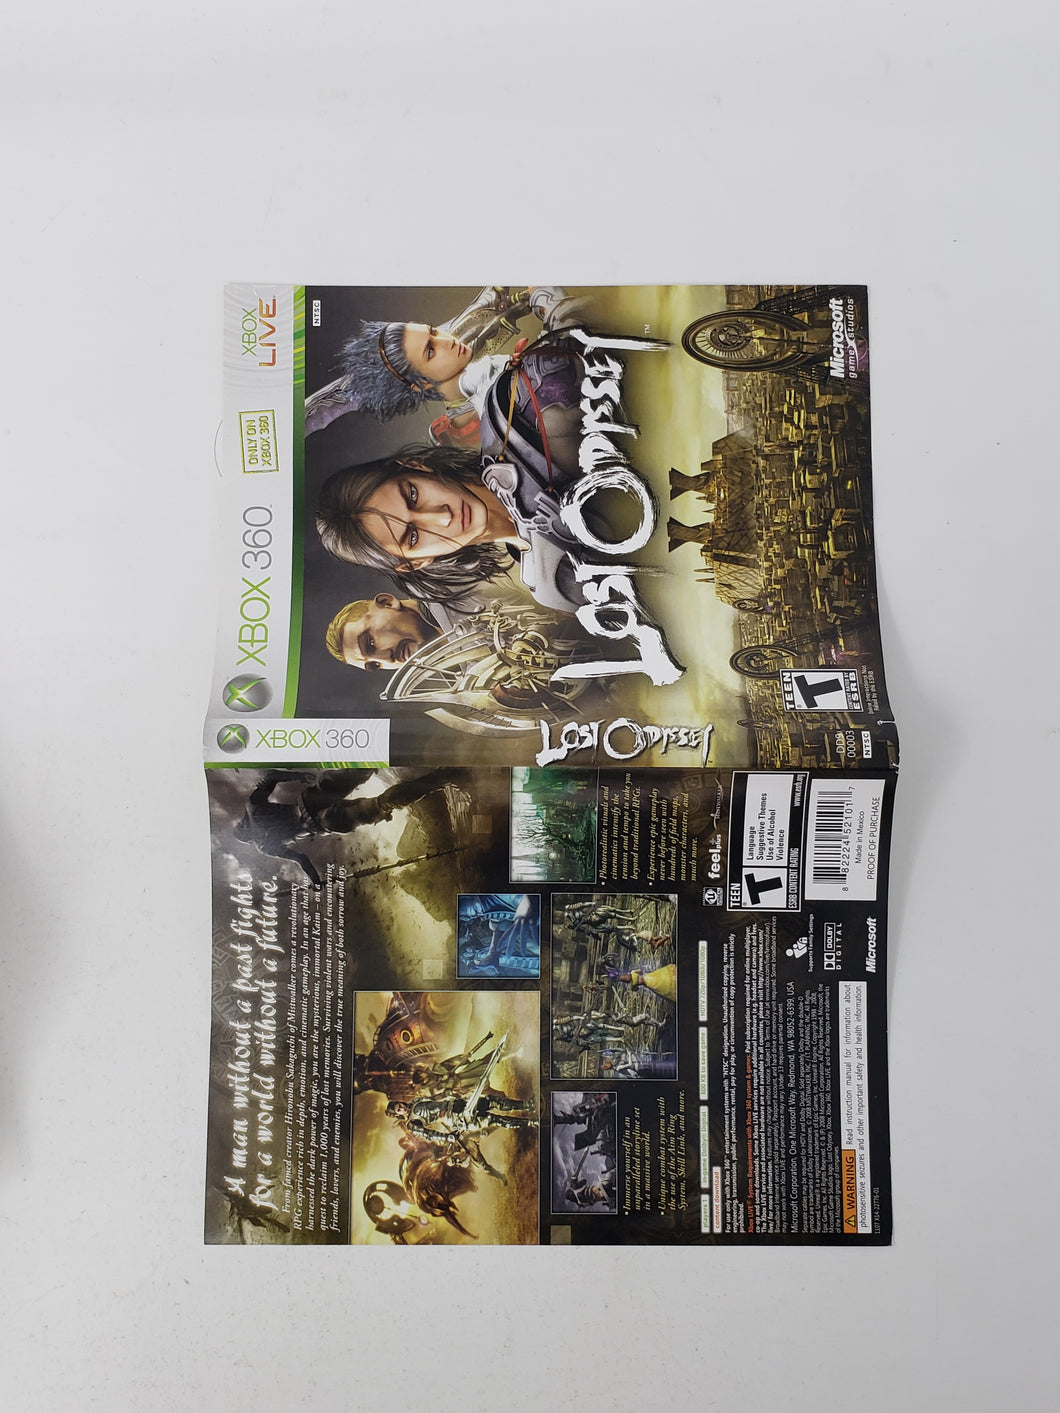 Lost Odyssey [Couverture] - Microsoft XBOX360